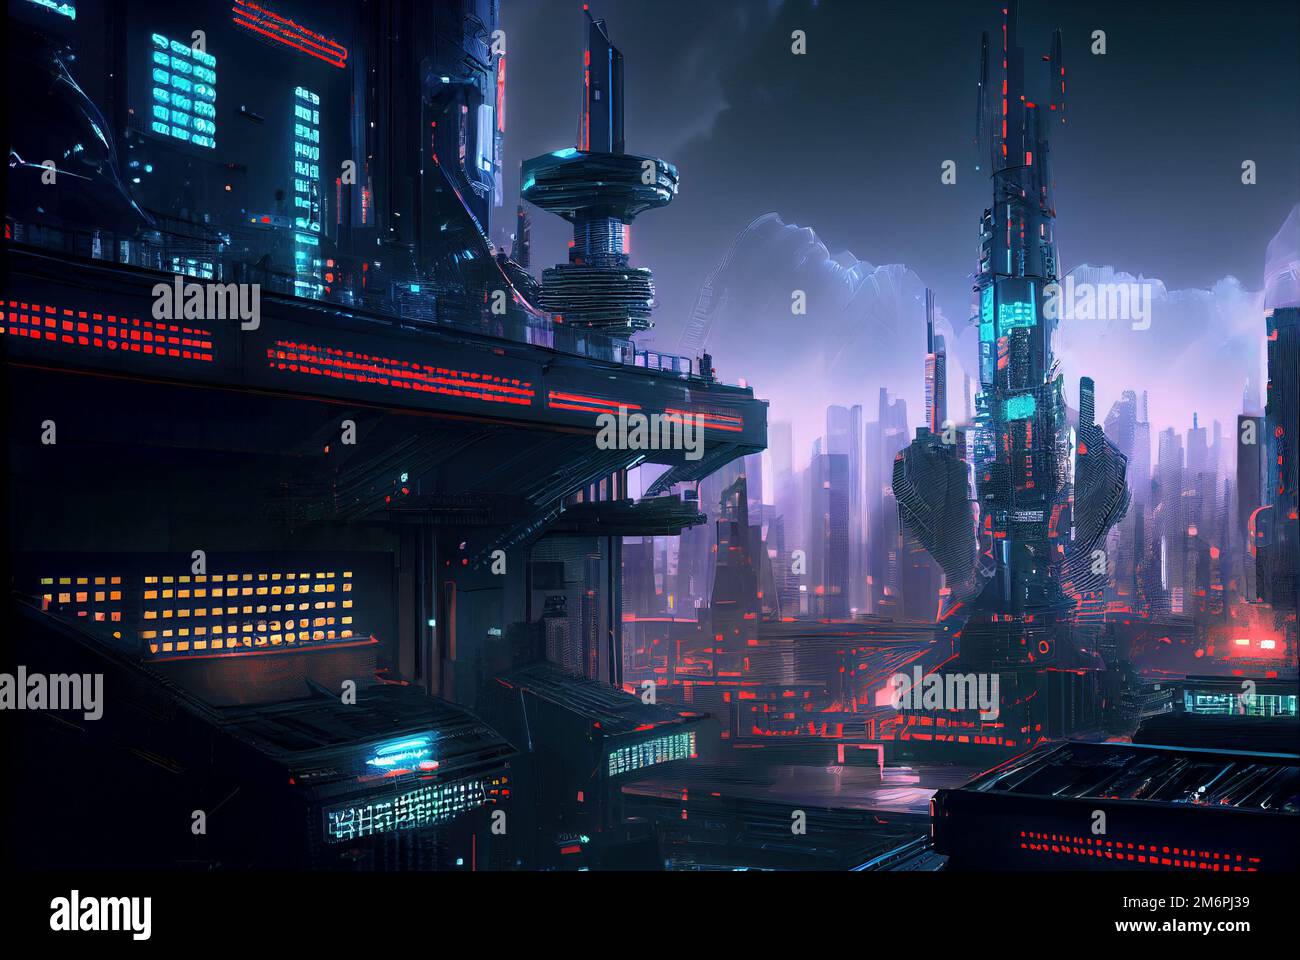 Cyber city at night, futuristic buildings view. Urban neon street scene, fantasy dark skyline. Concept of future, metaverse, technology Stock Photo